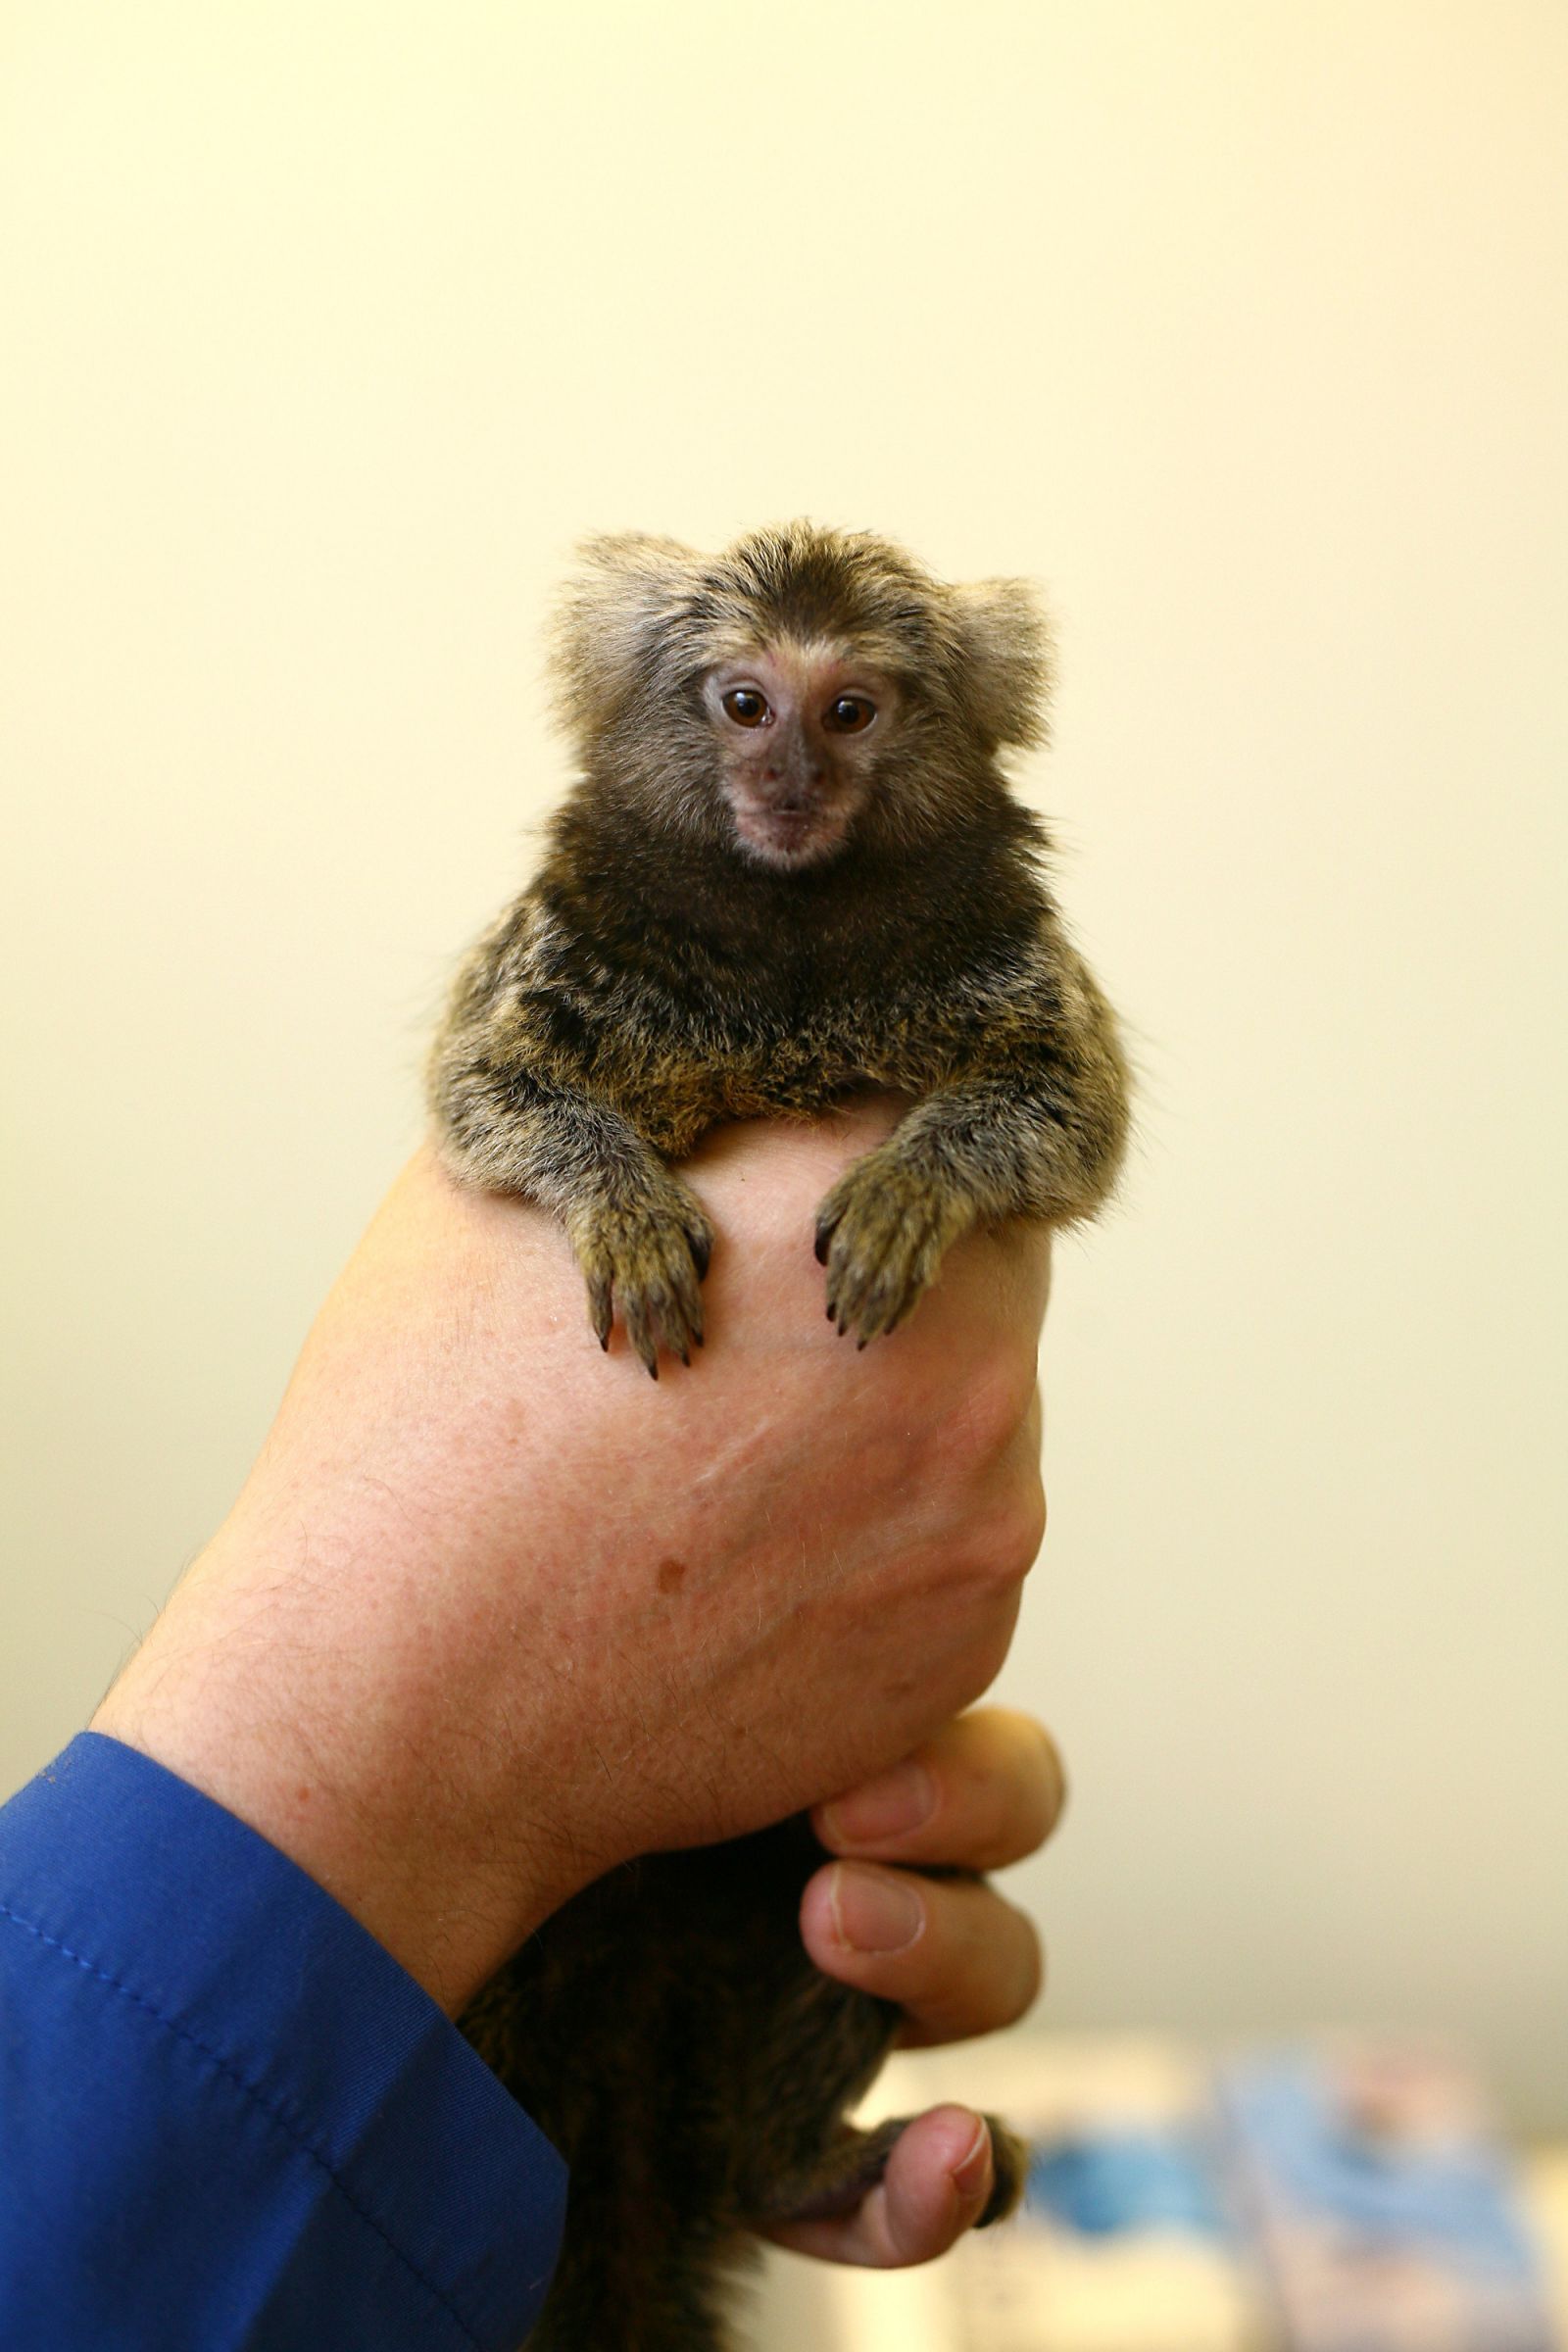 Technician holds marmoset